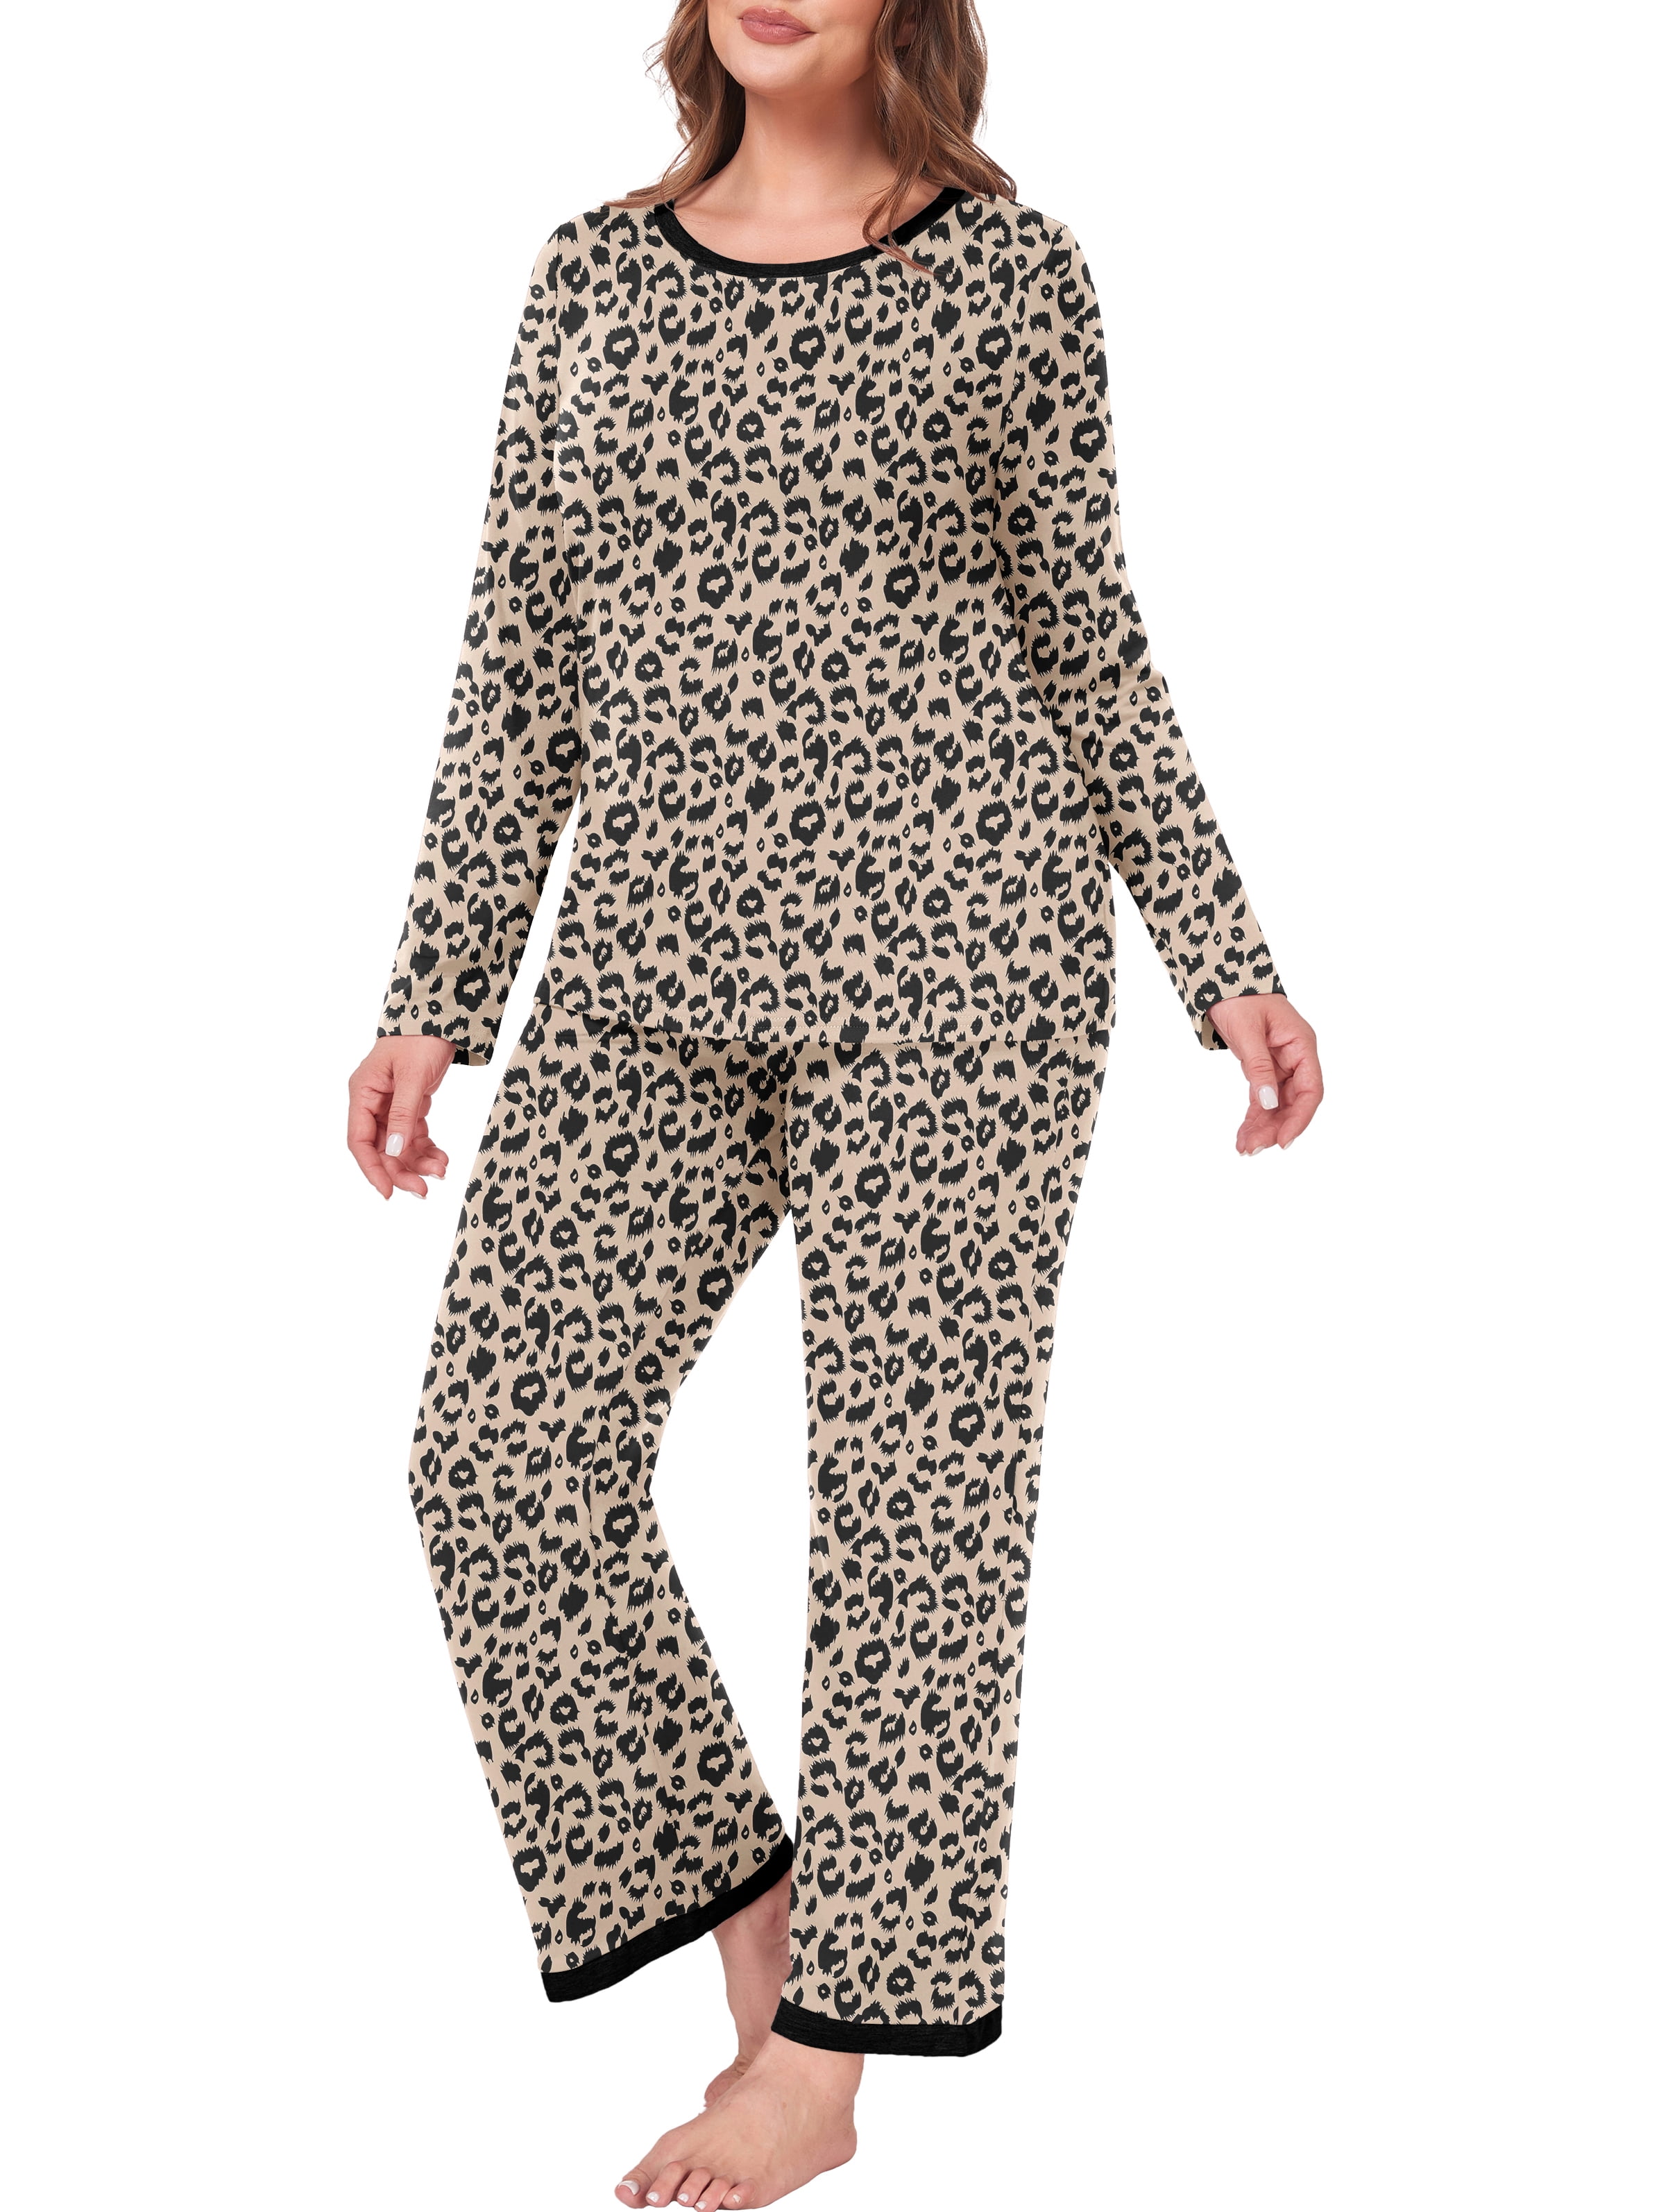 Cueply Womens Plus Size Pajamas Long Sleeve Pjs Sets Loungewear ...